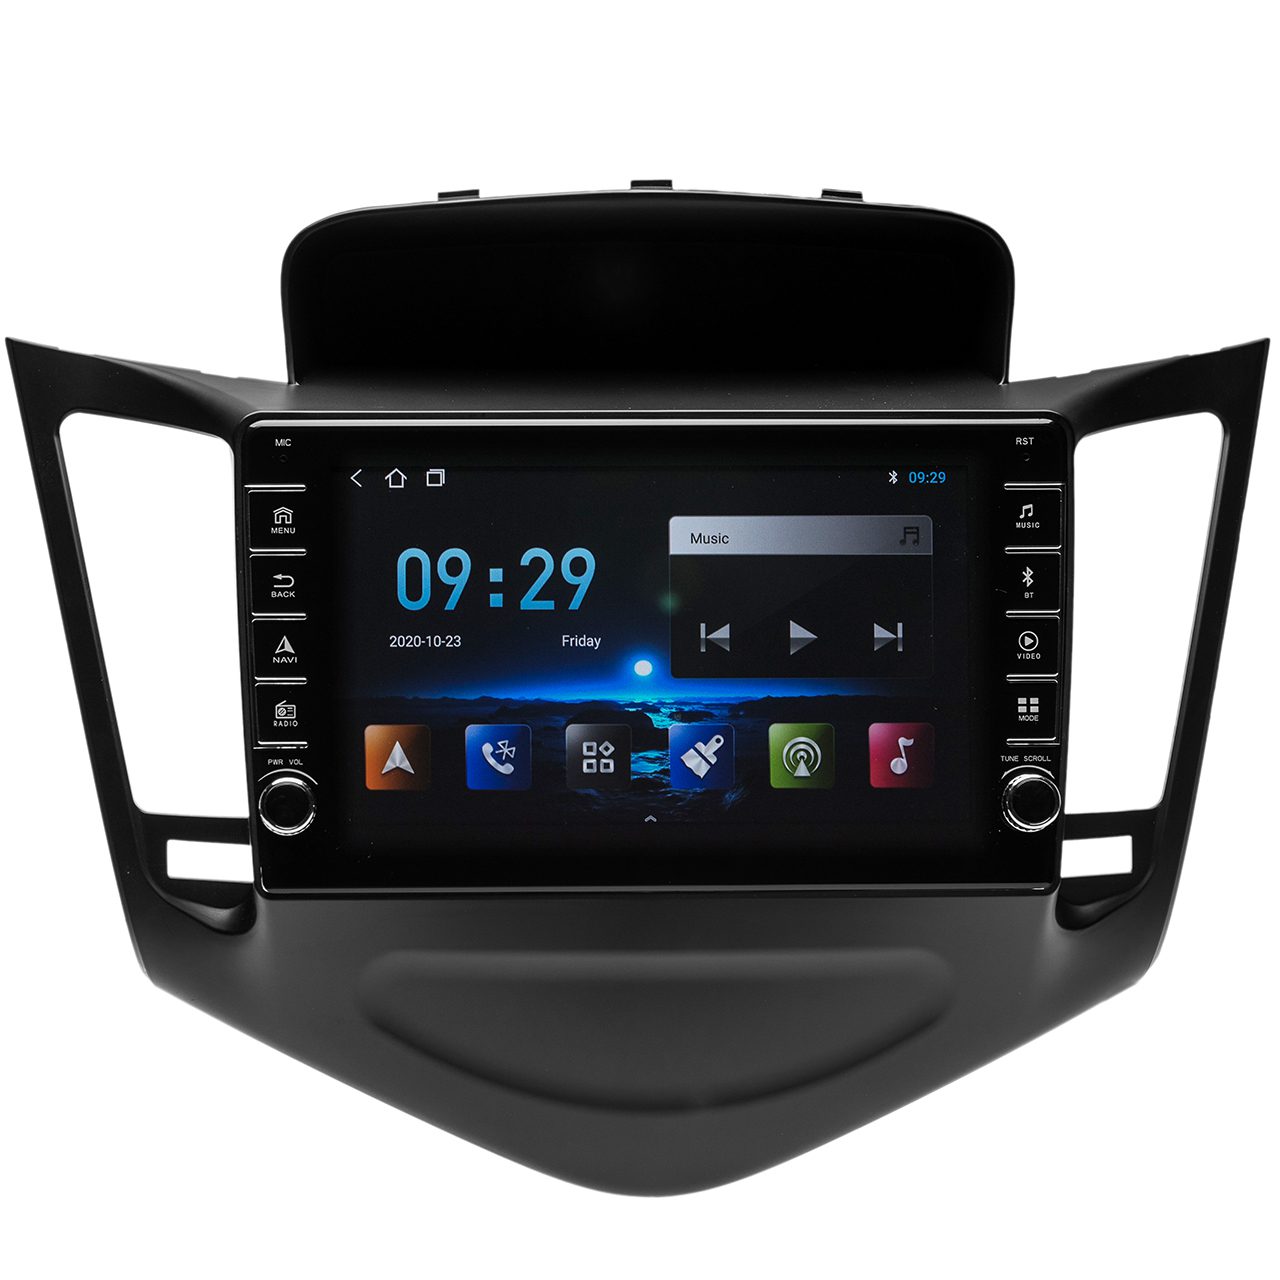 Navigatie AUTONAV Android GPS Dedicata Chevrolet Cruze 2008-2016, Model PRO Memorie 128GB Stocare, 6GB DDR3 RAM, Butoane Laterale Si Regulator Volum, Display 8